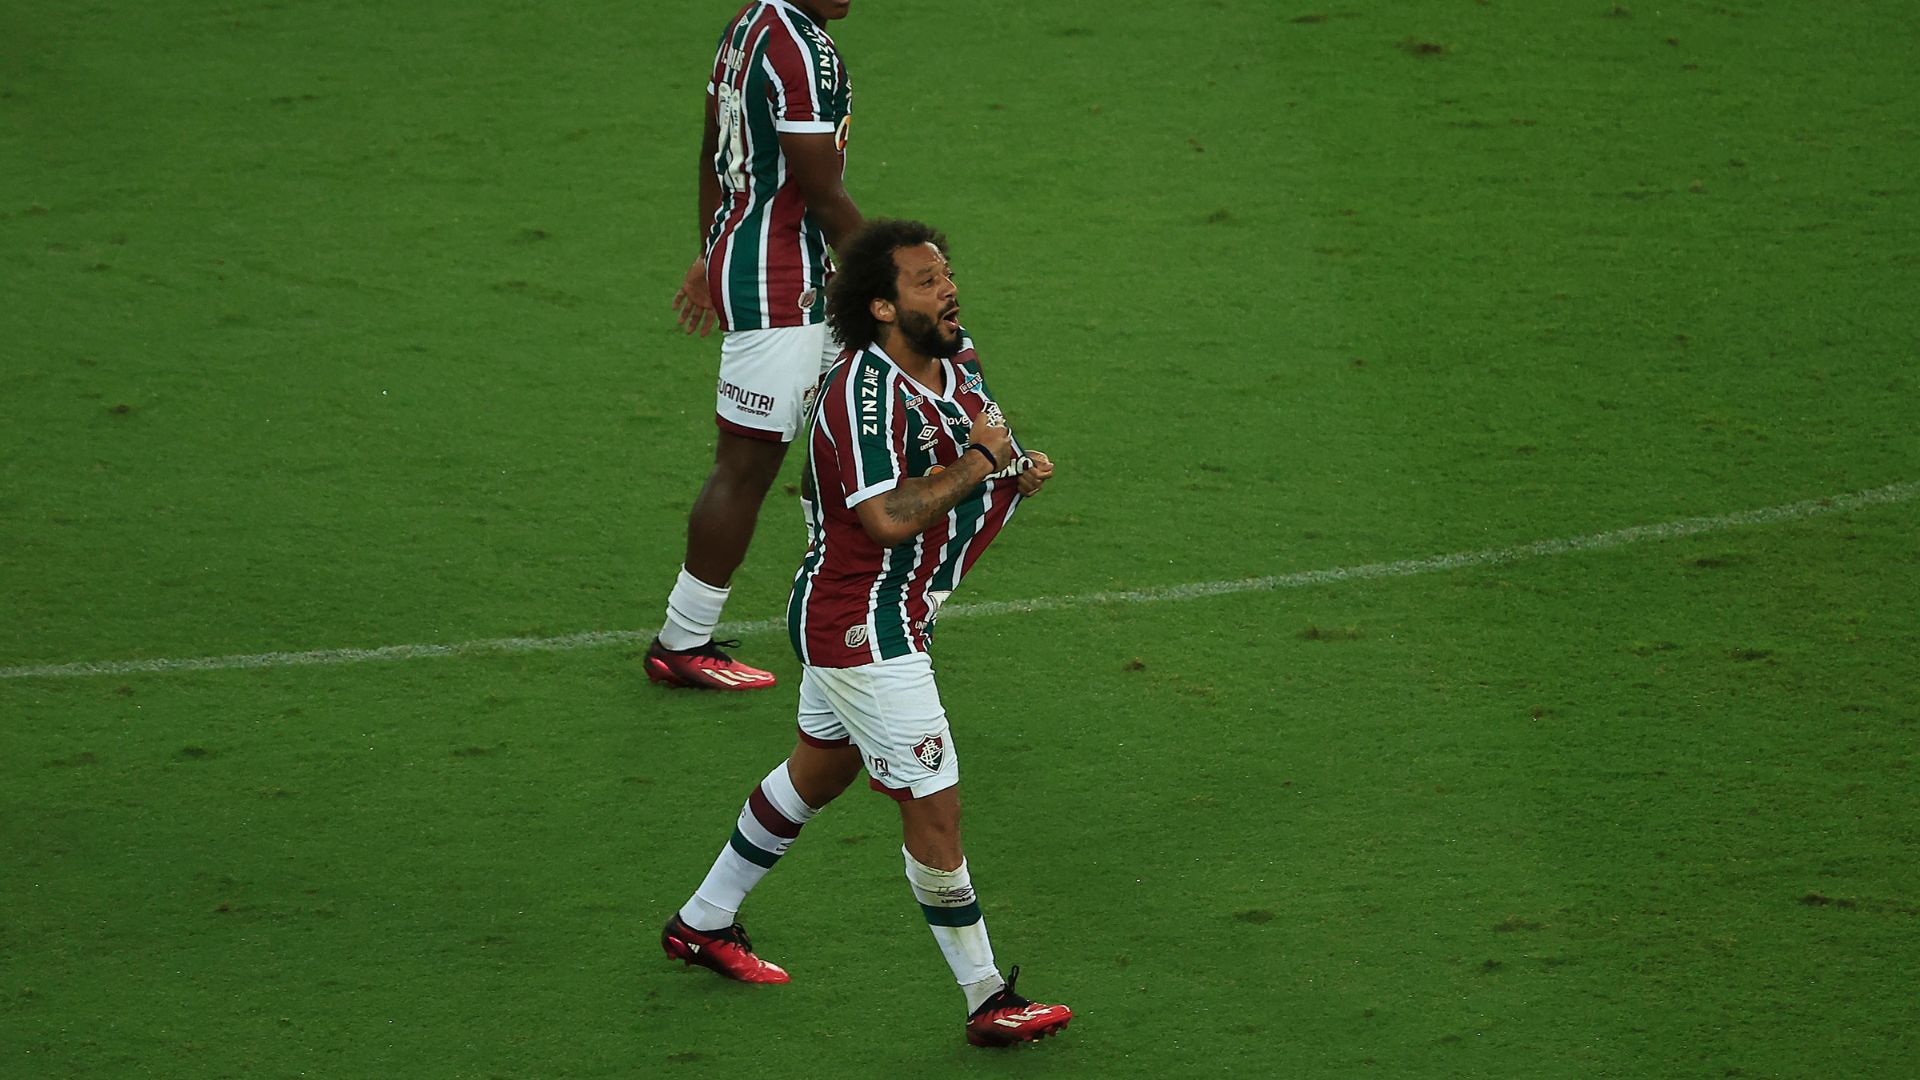 Marcelo comemorando gol pelo Fluminense (Crédito: Getty Images)